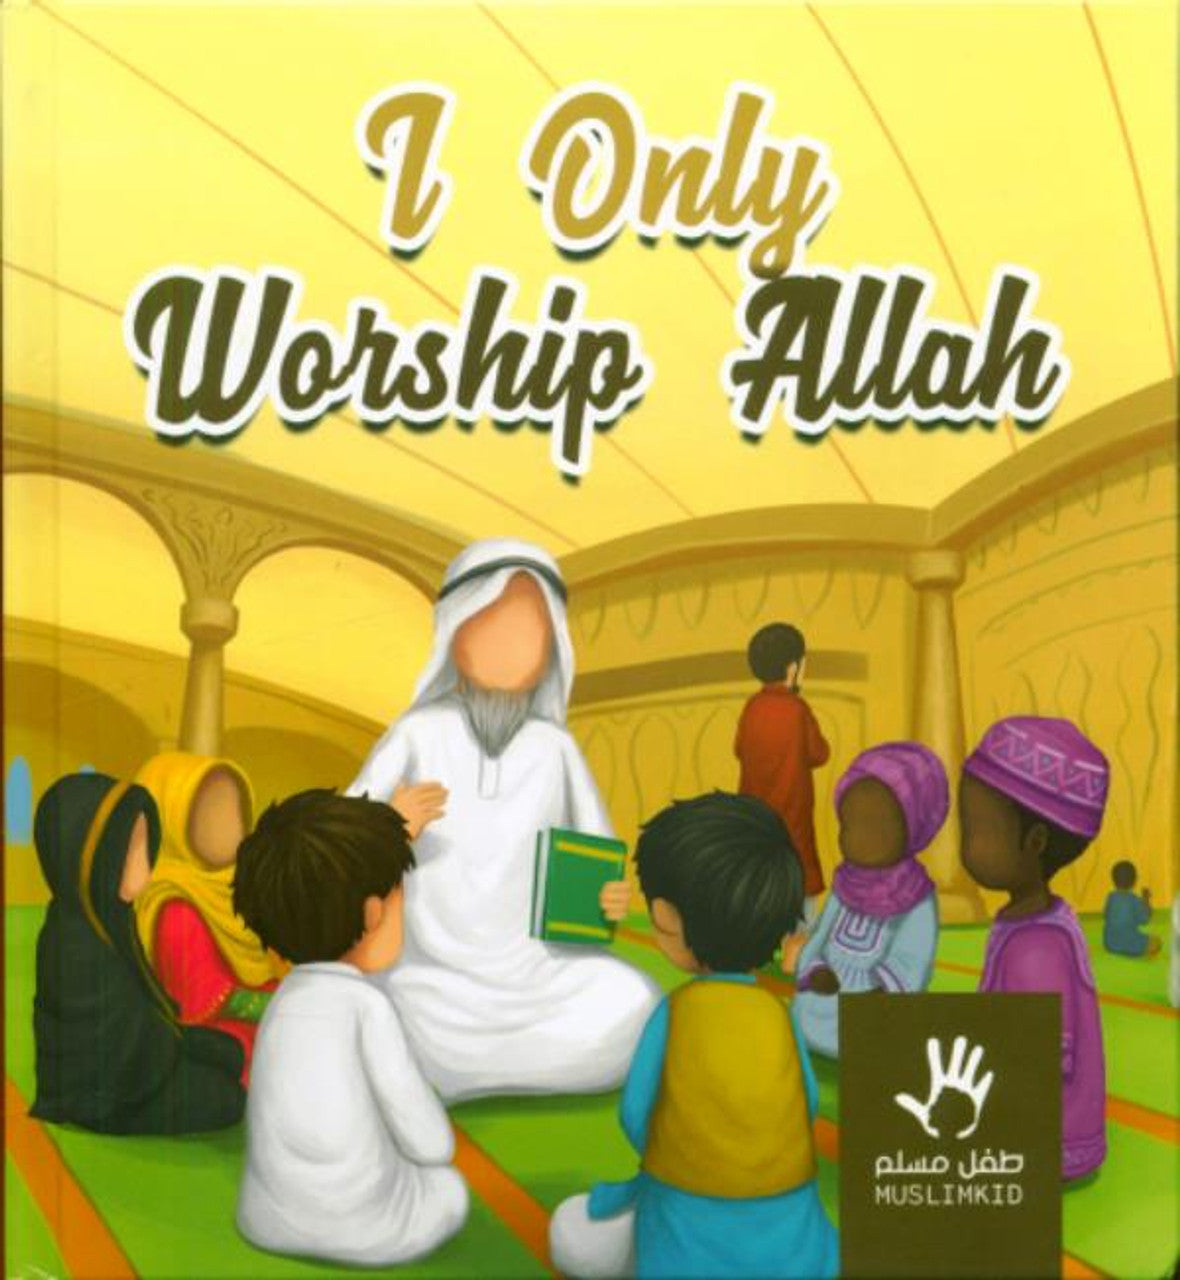 I Only Worship Allah